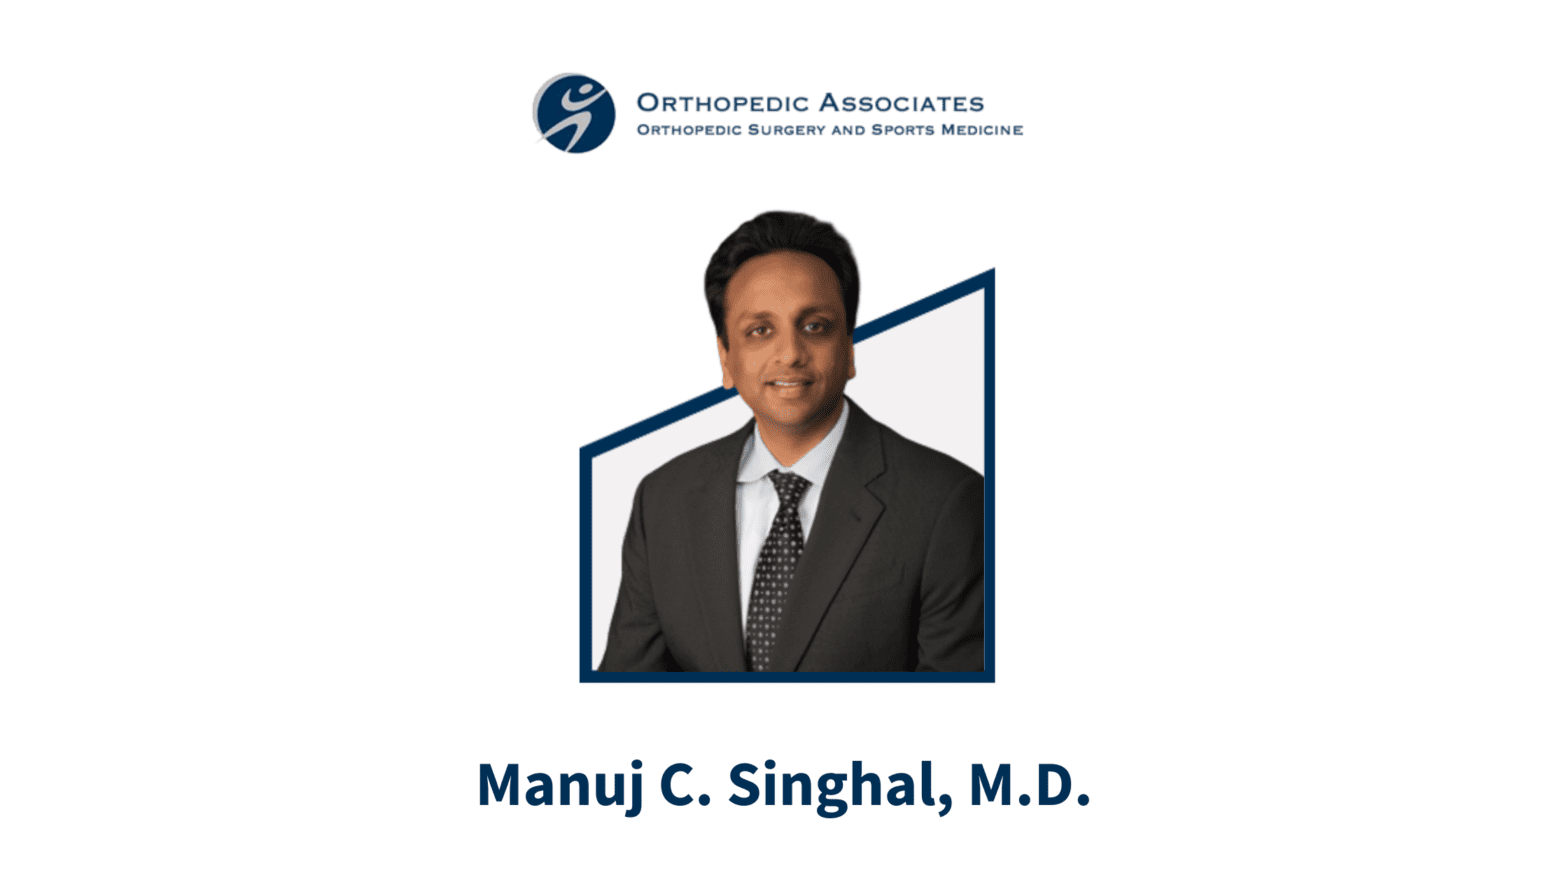 Manuj C. Singhal, M.D. - Orthopedic Surgeon Spotlight